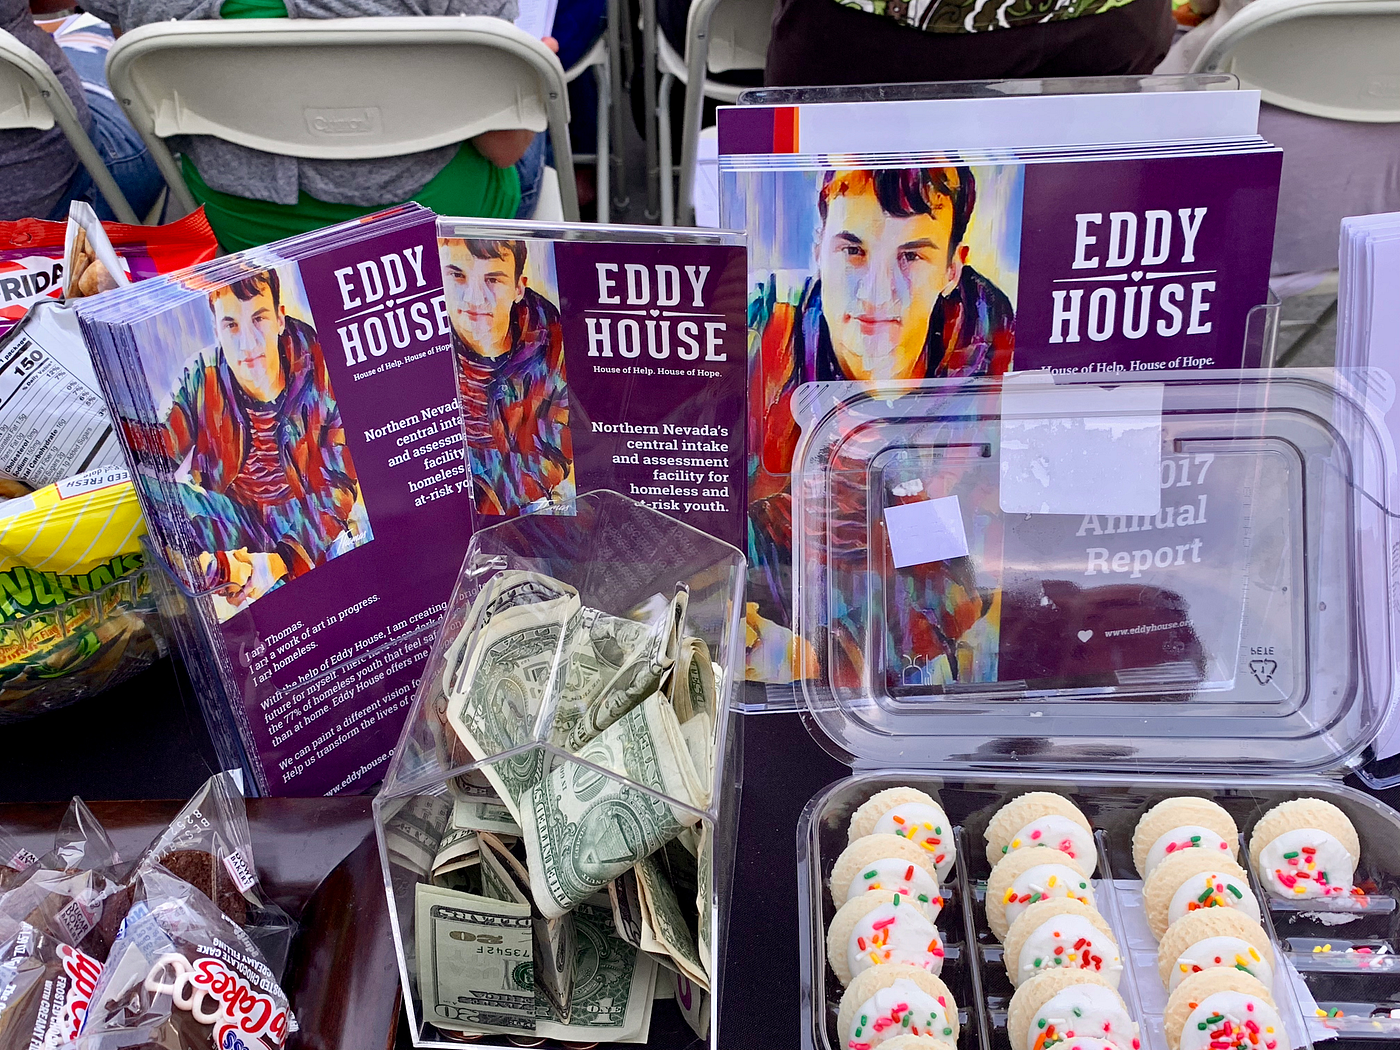 How to Help – Eddy House